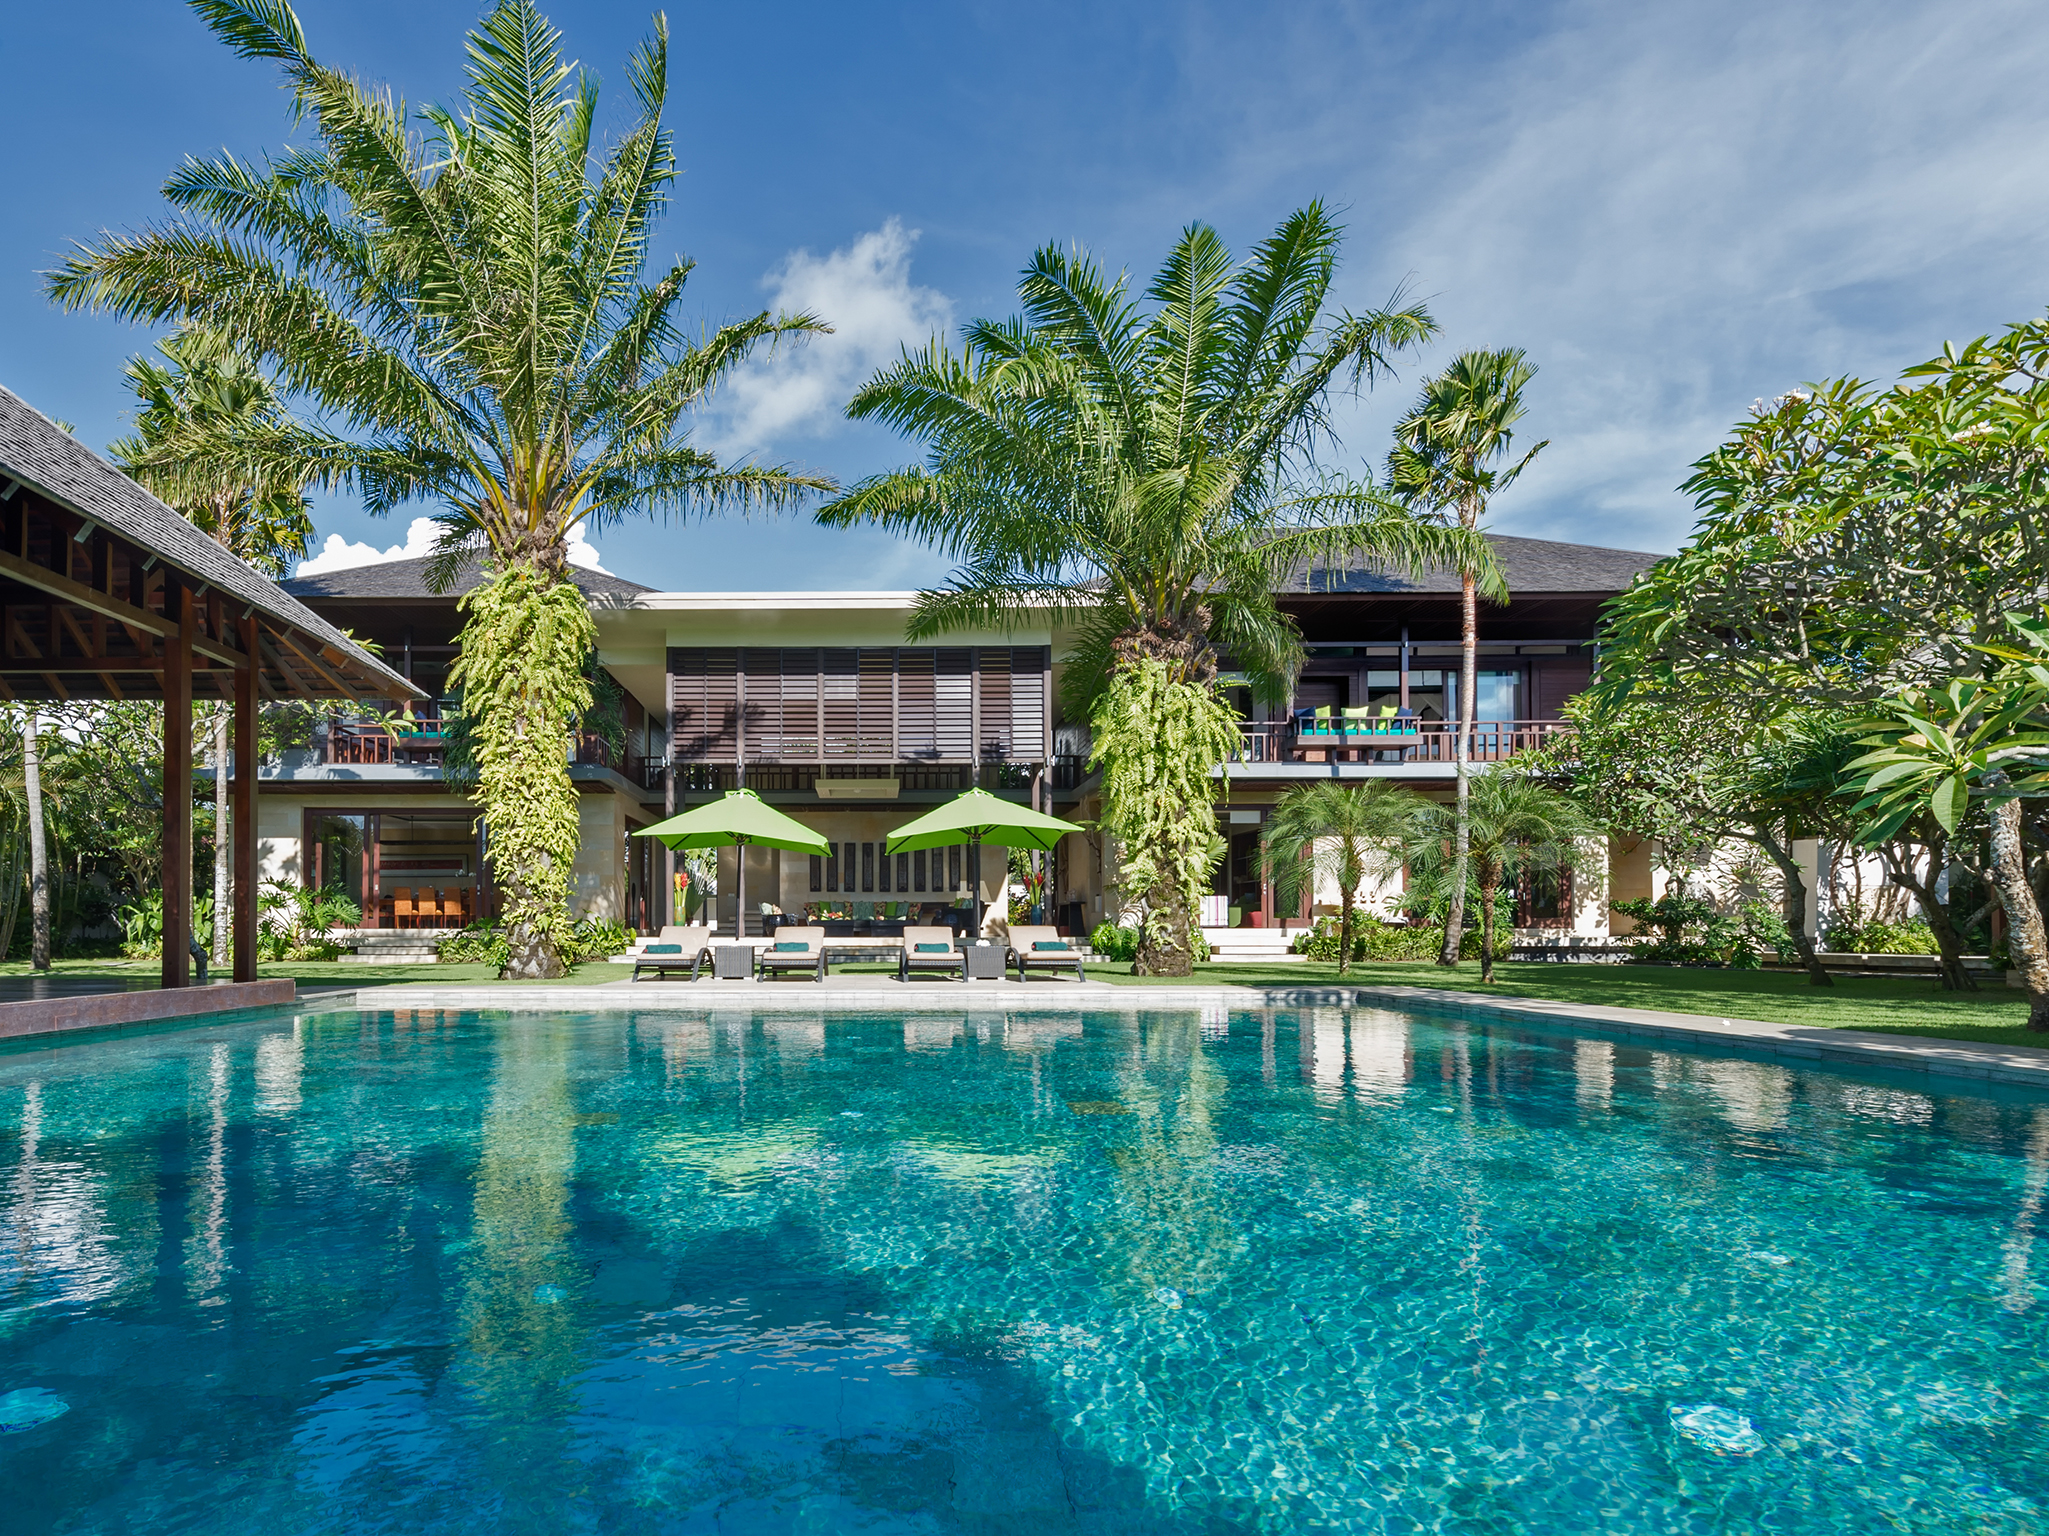 Bendega Nui - Pool and villa